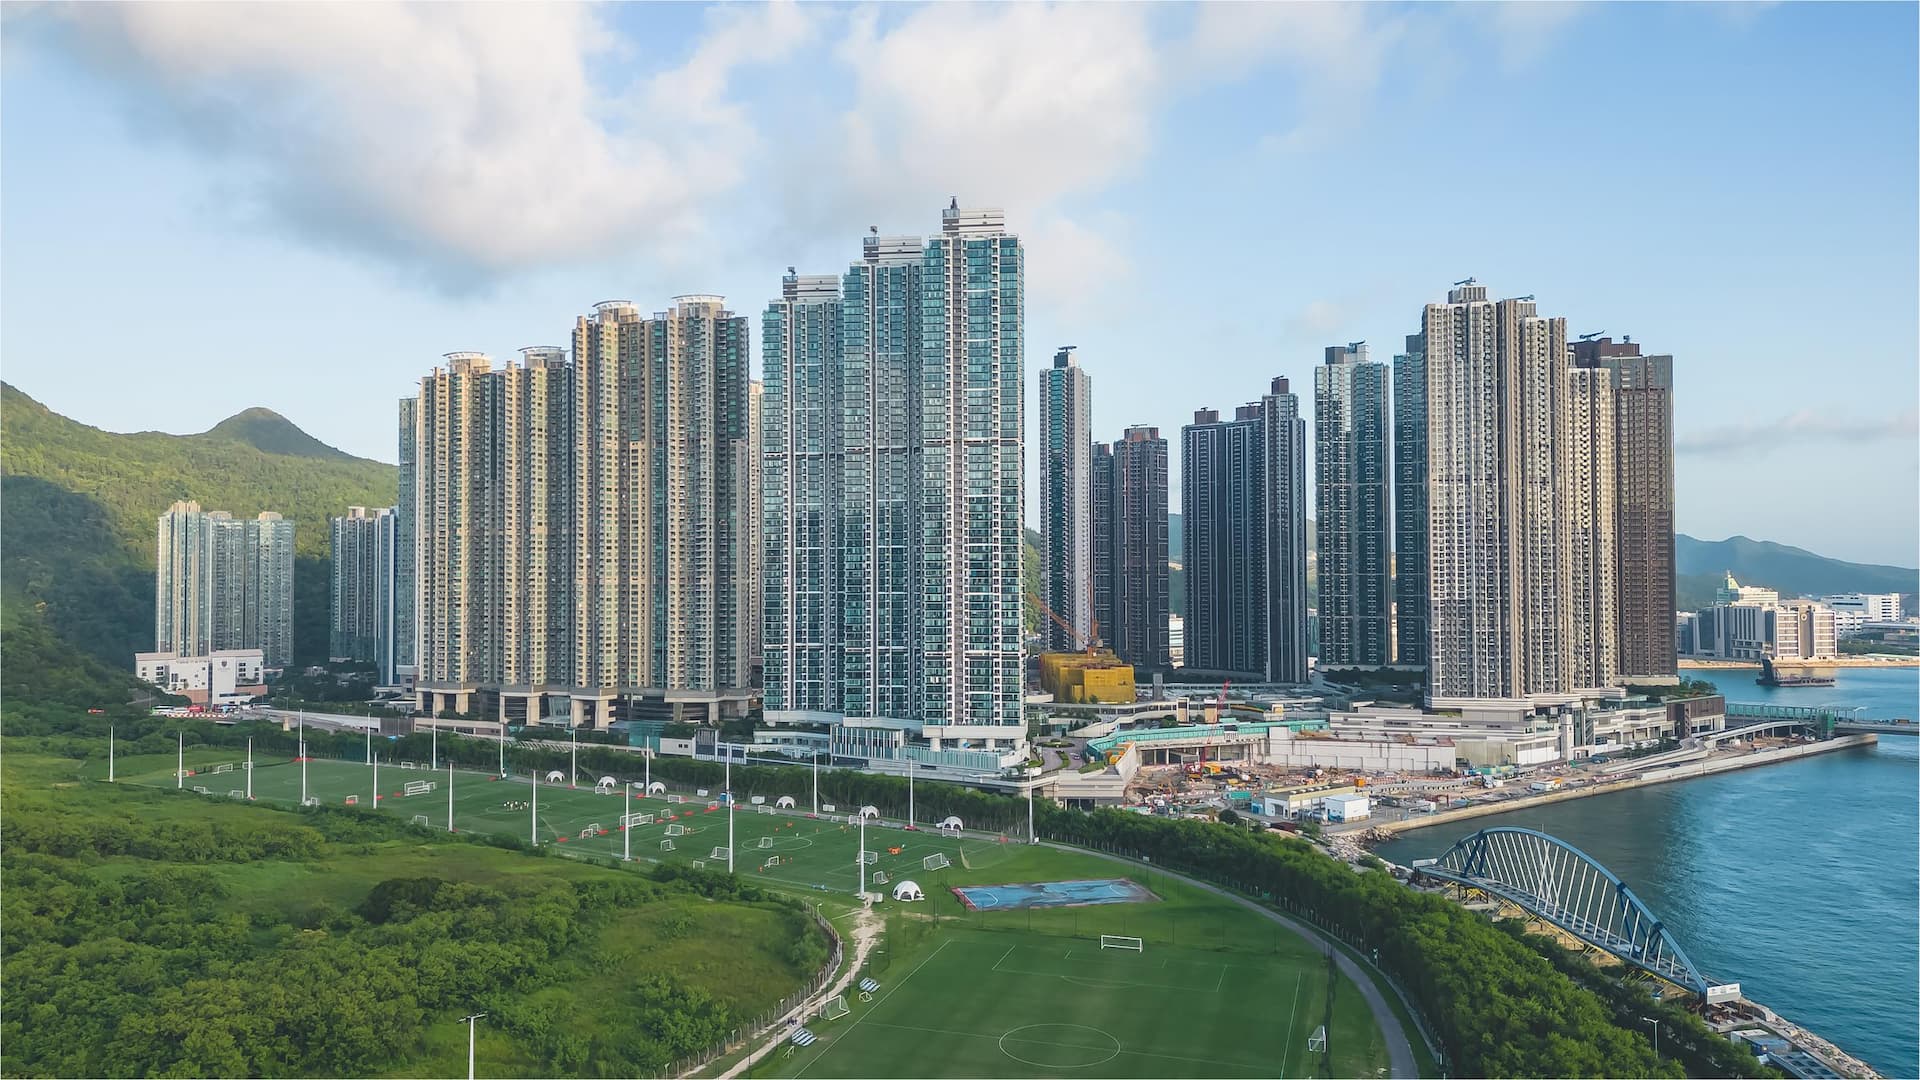 residential District at Lohas Park, Tseung Kwan O, 5 Oct 2022